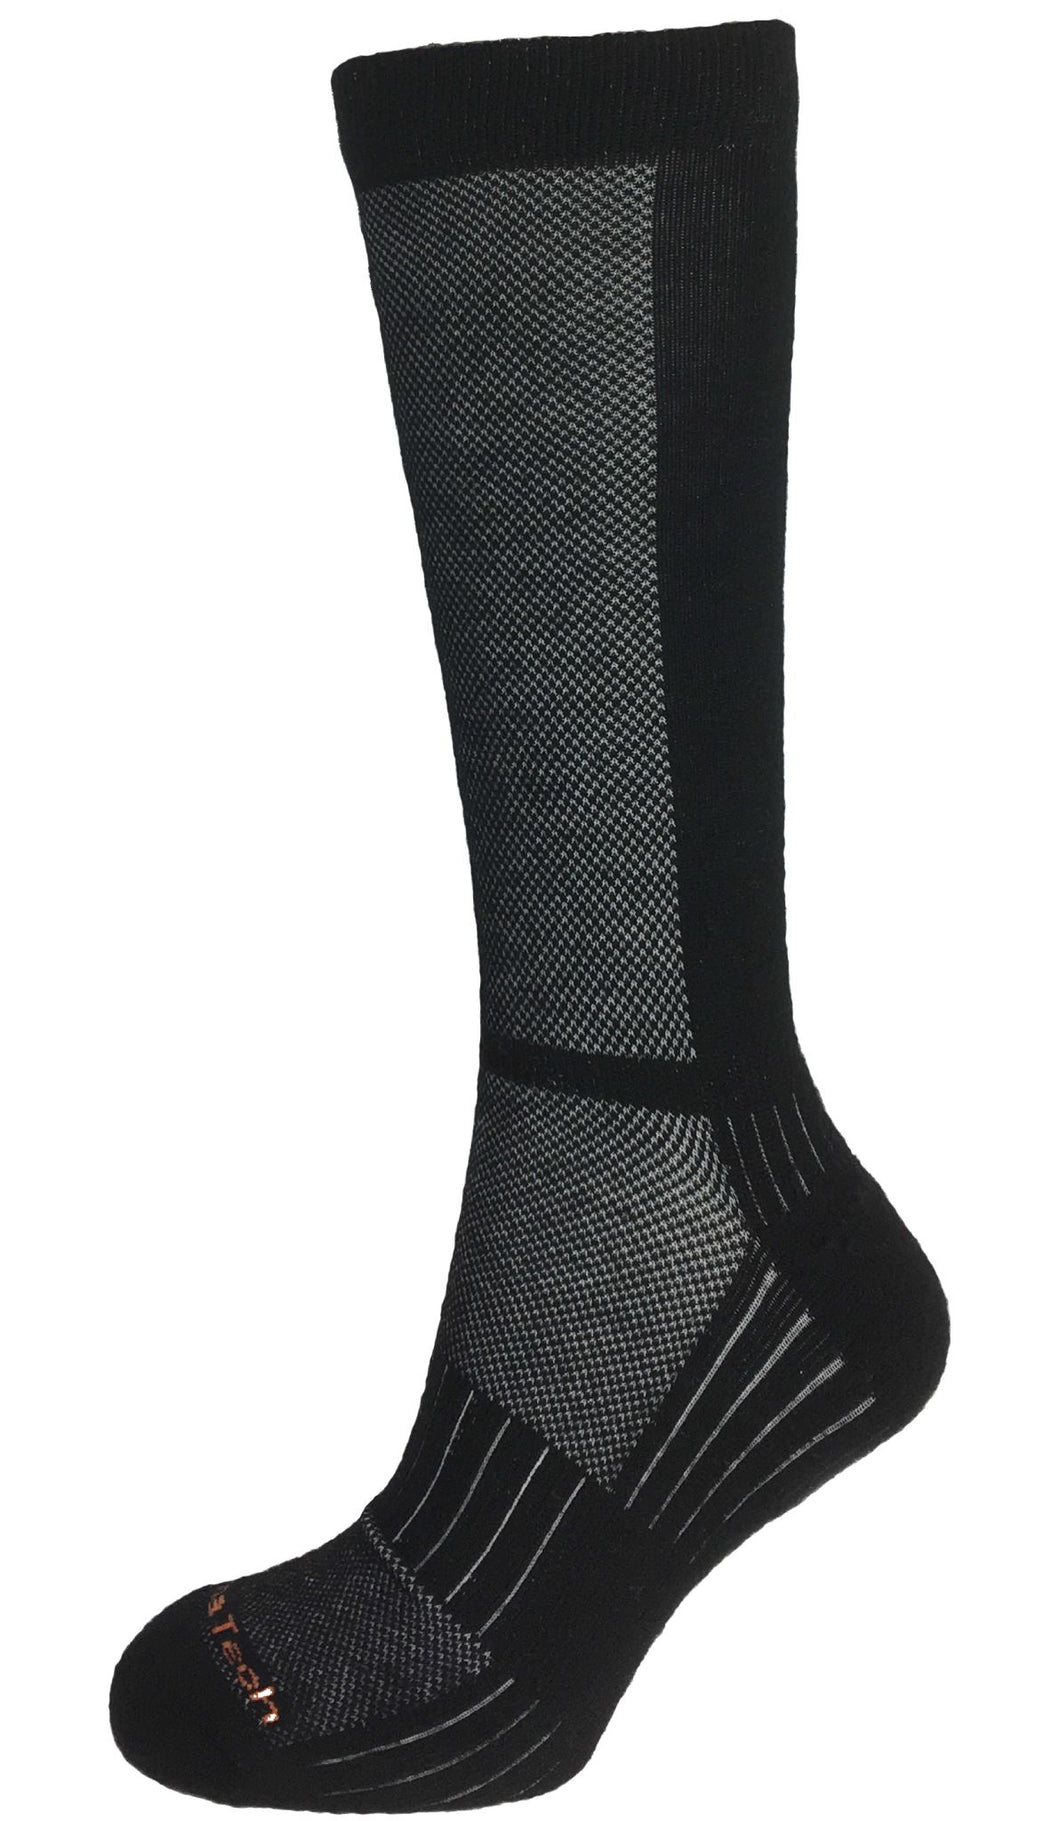 Thermatech Merino Lite Hiker Socks, Black/Grey, Size US 6-10 T33U, Unisex